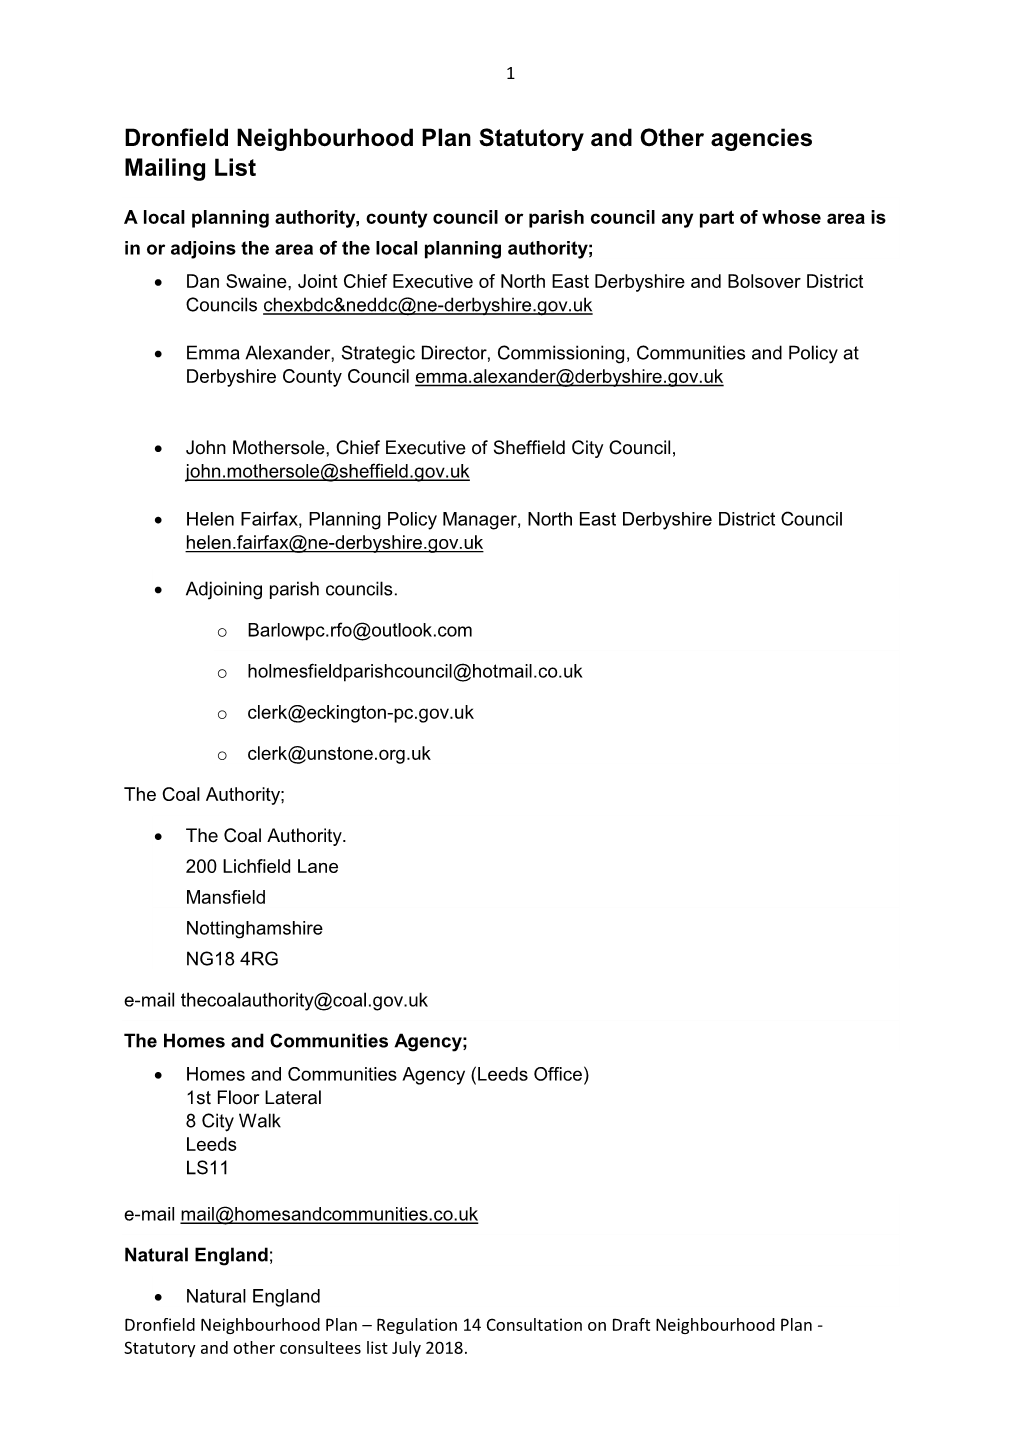 Dronfield Neighbourhood Plan Statutory and Other Agencies Mailing List